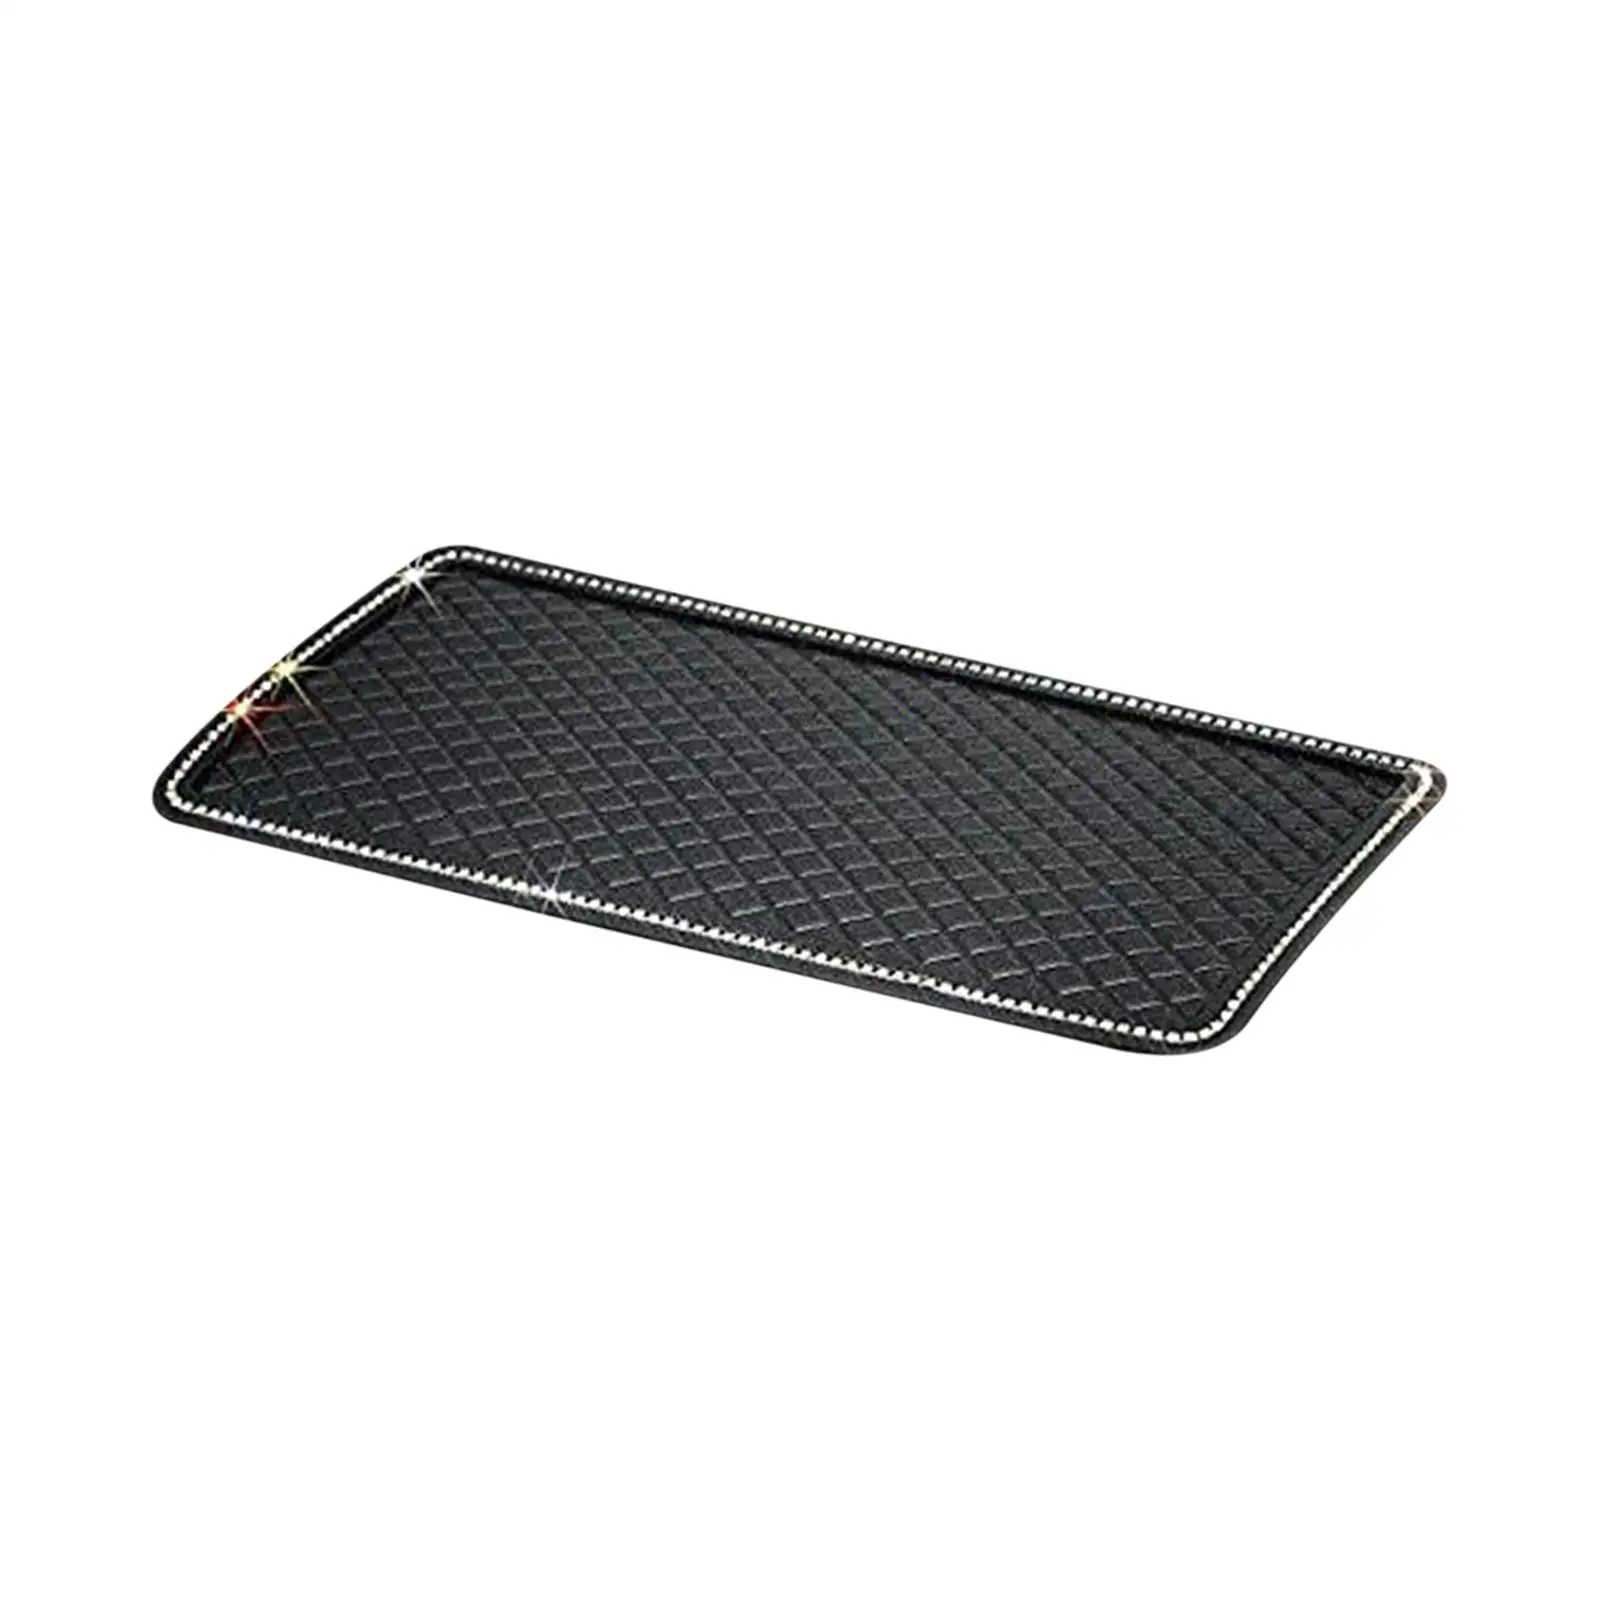 Car Anti Slip Sticky Dashboard Pad Glitter Rhinestone for Phones Keys